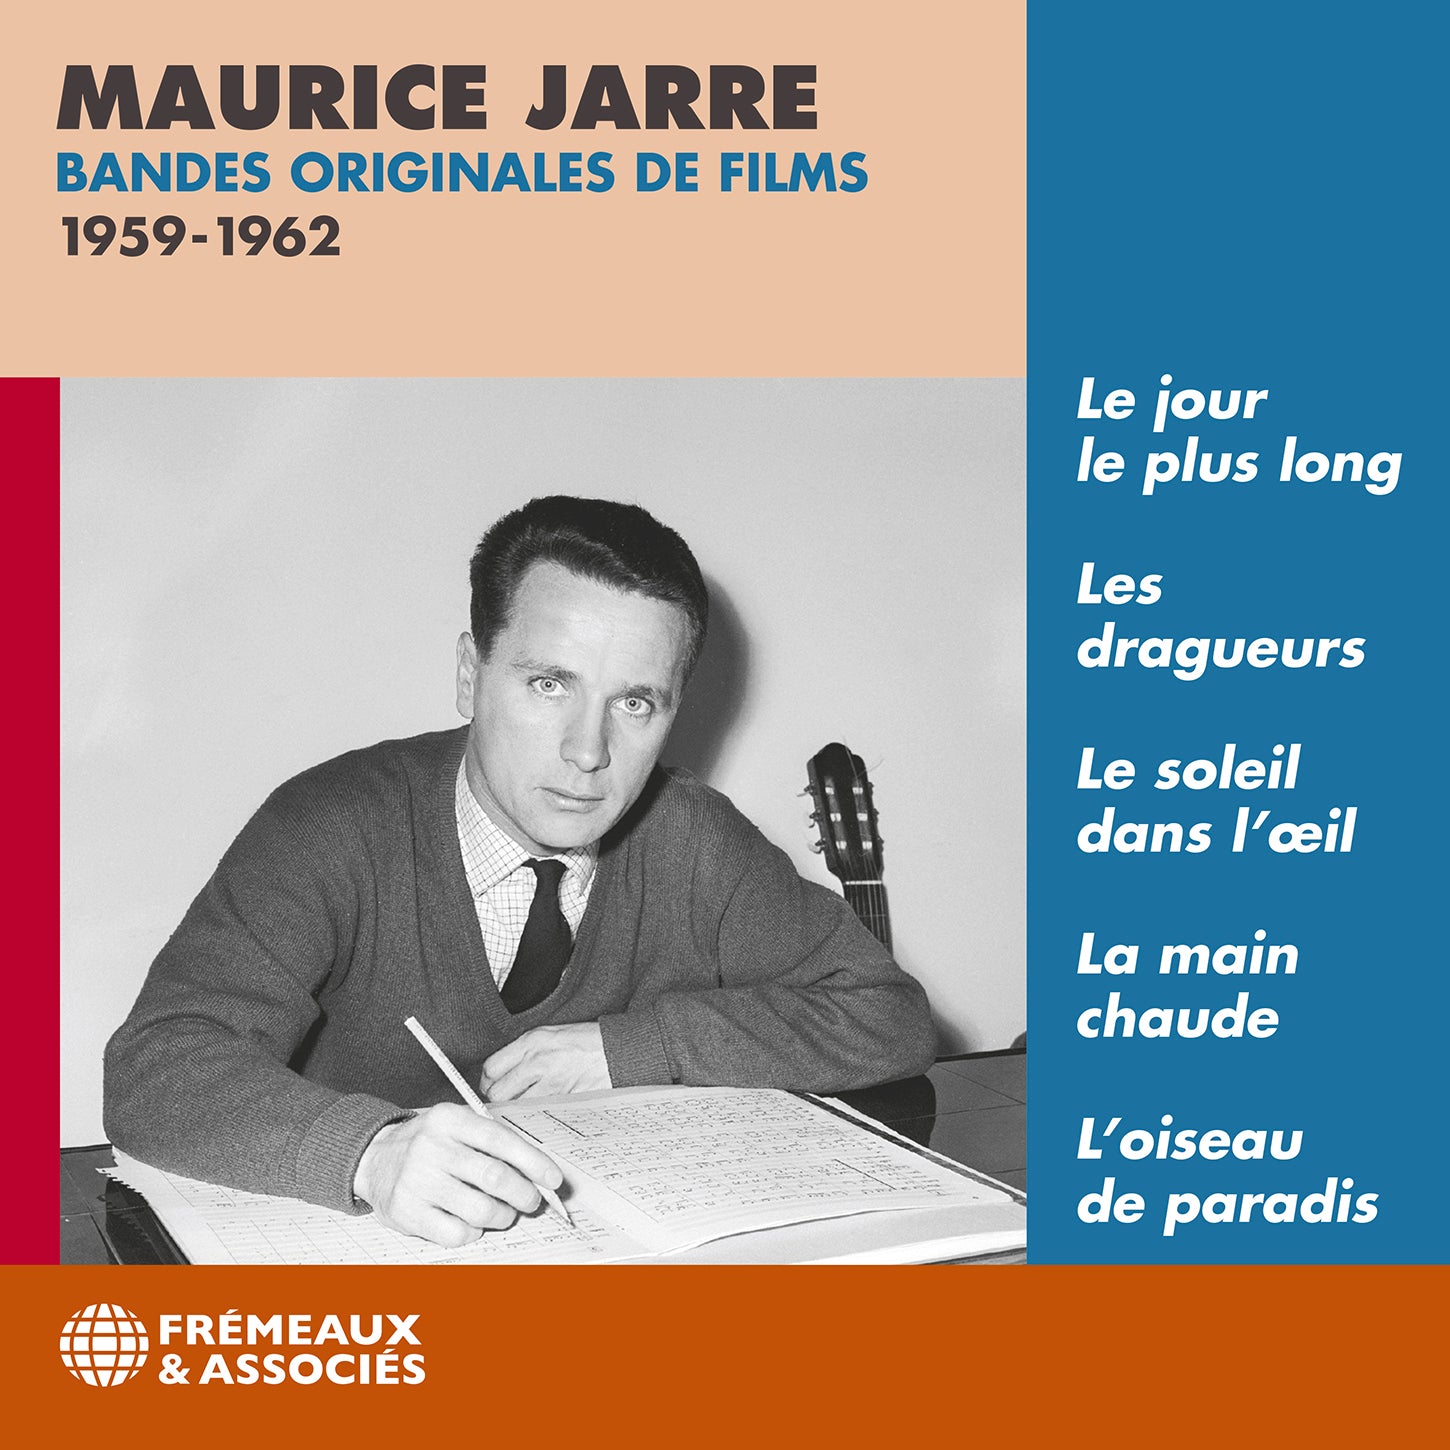 Maurice Jarre: The Original Soundtracks, 1959-1962